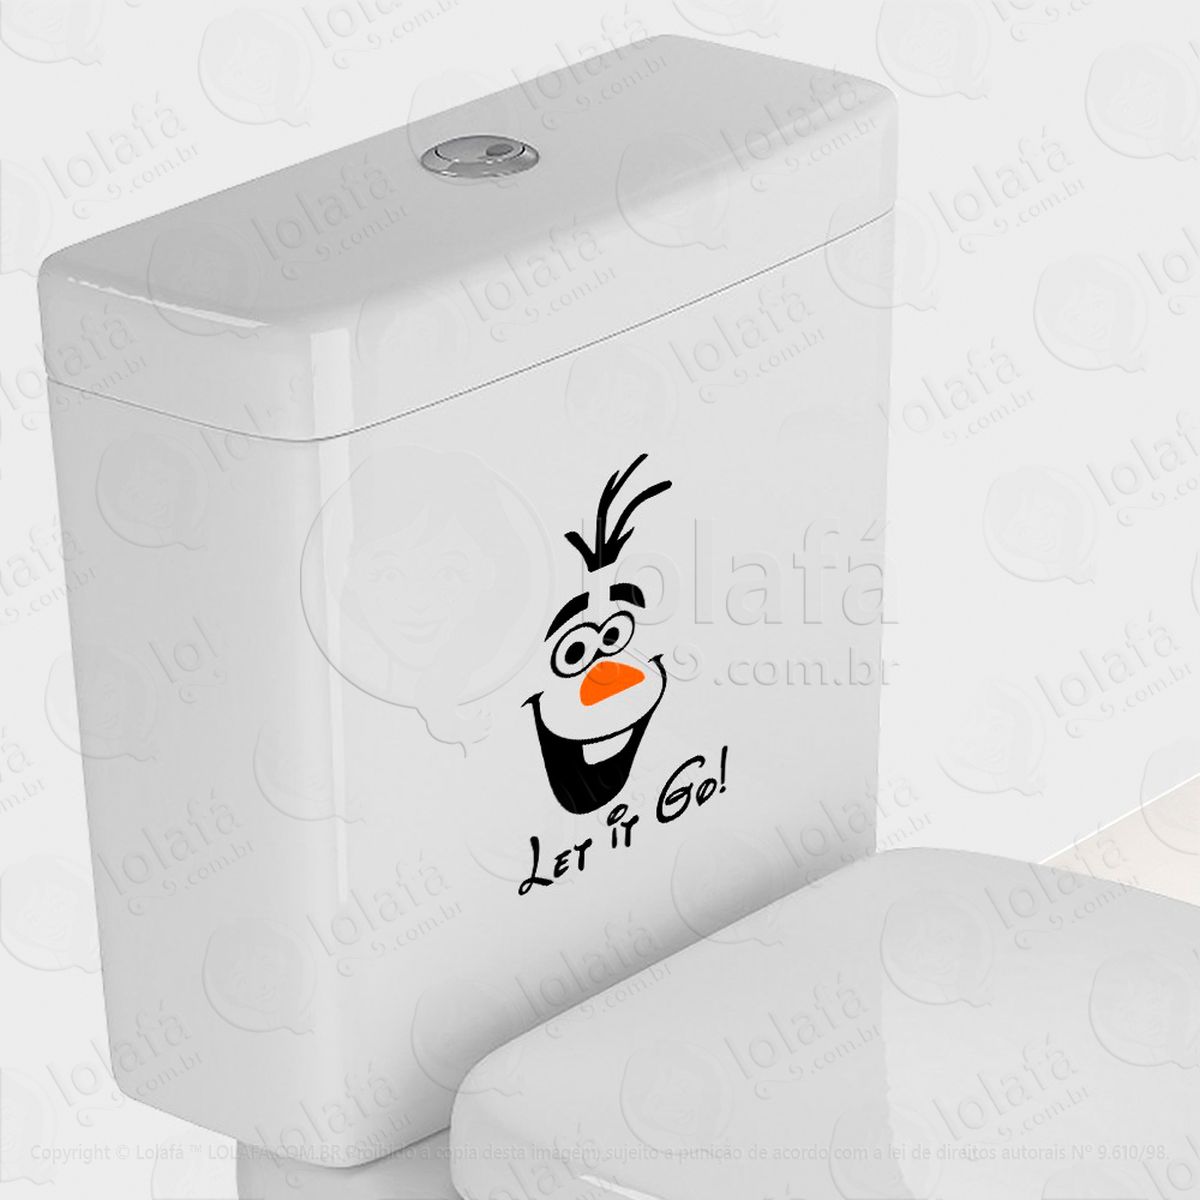 let adesivo para vaso sanitário e privada - mod:47